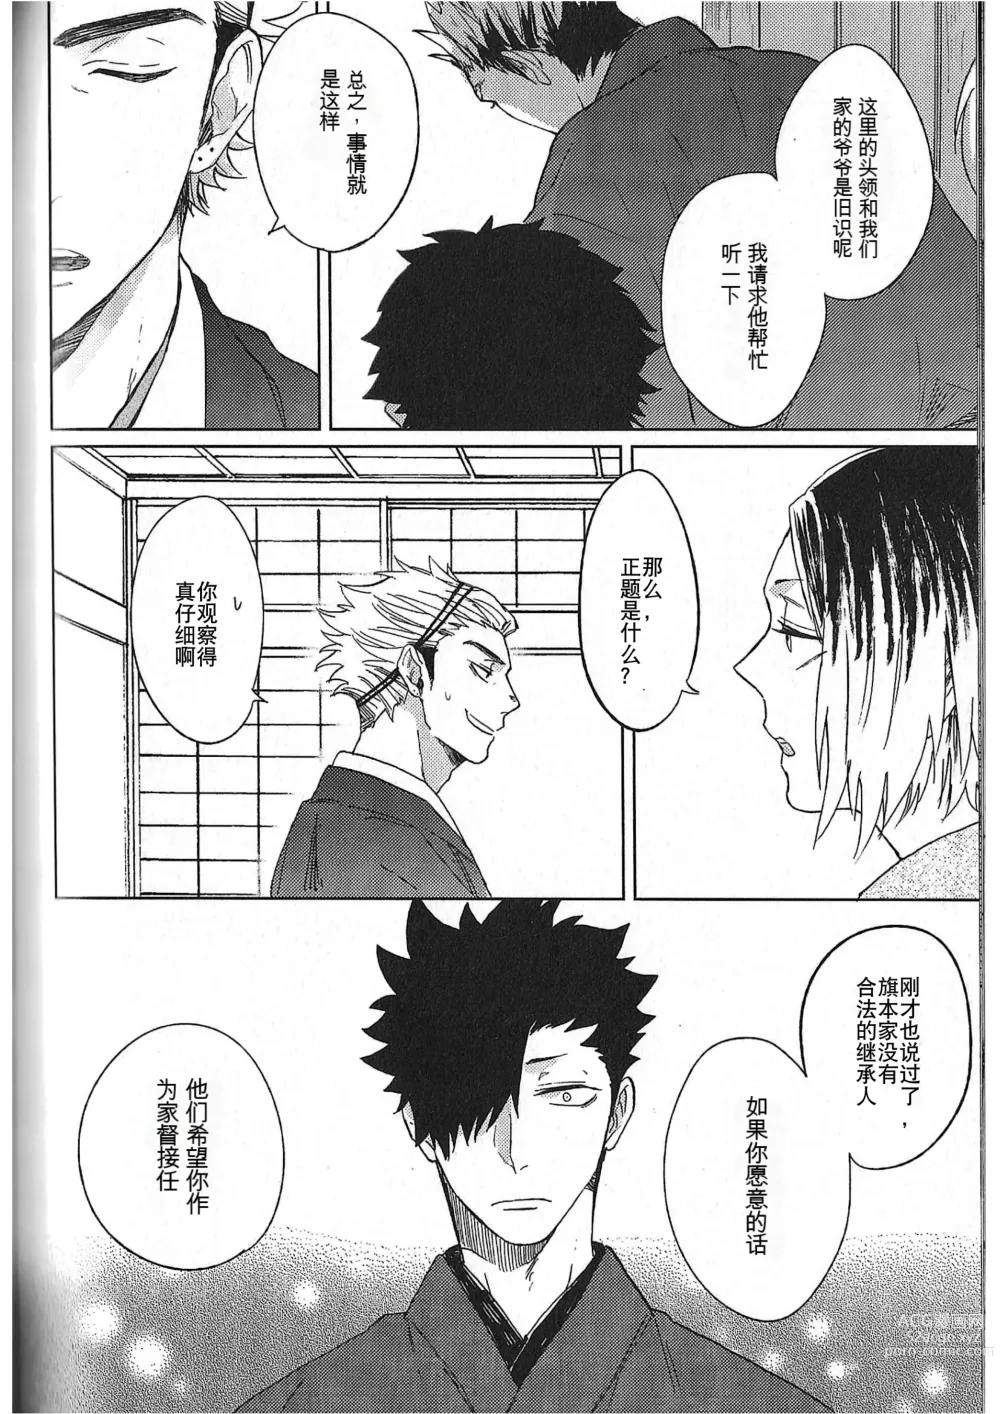 Page 29 of doujinshi 破晓之枭后篇